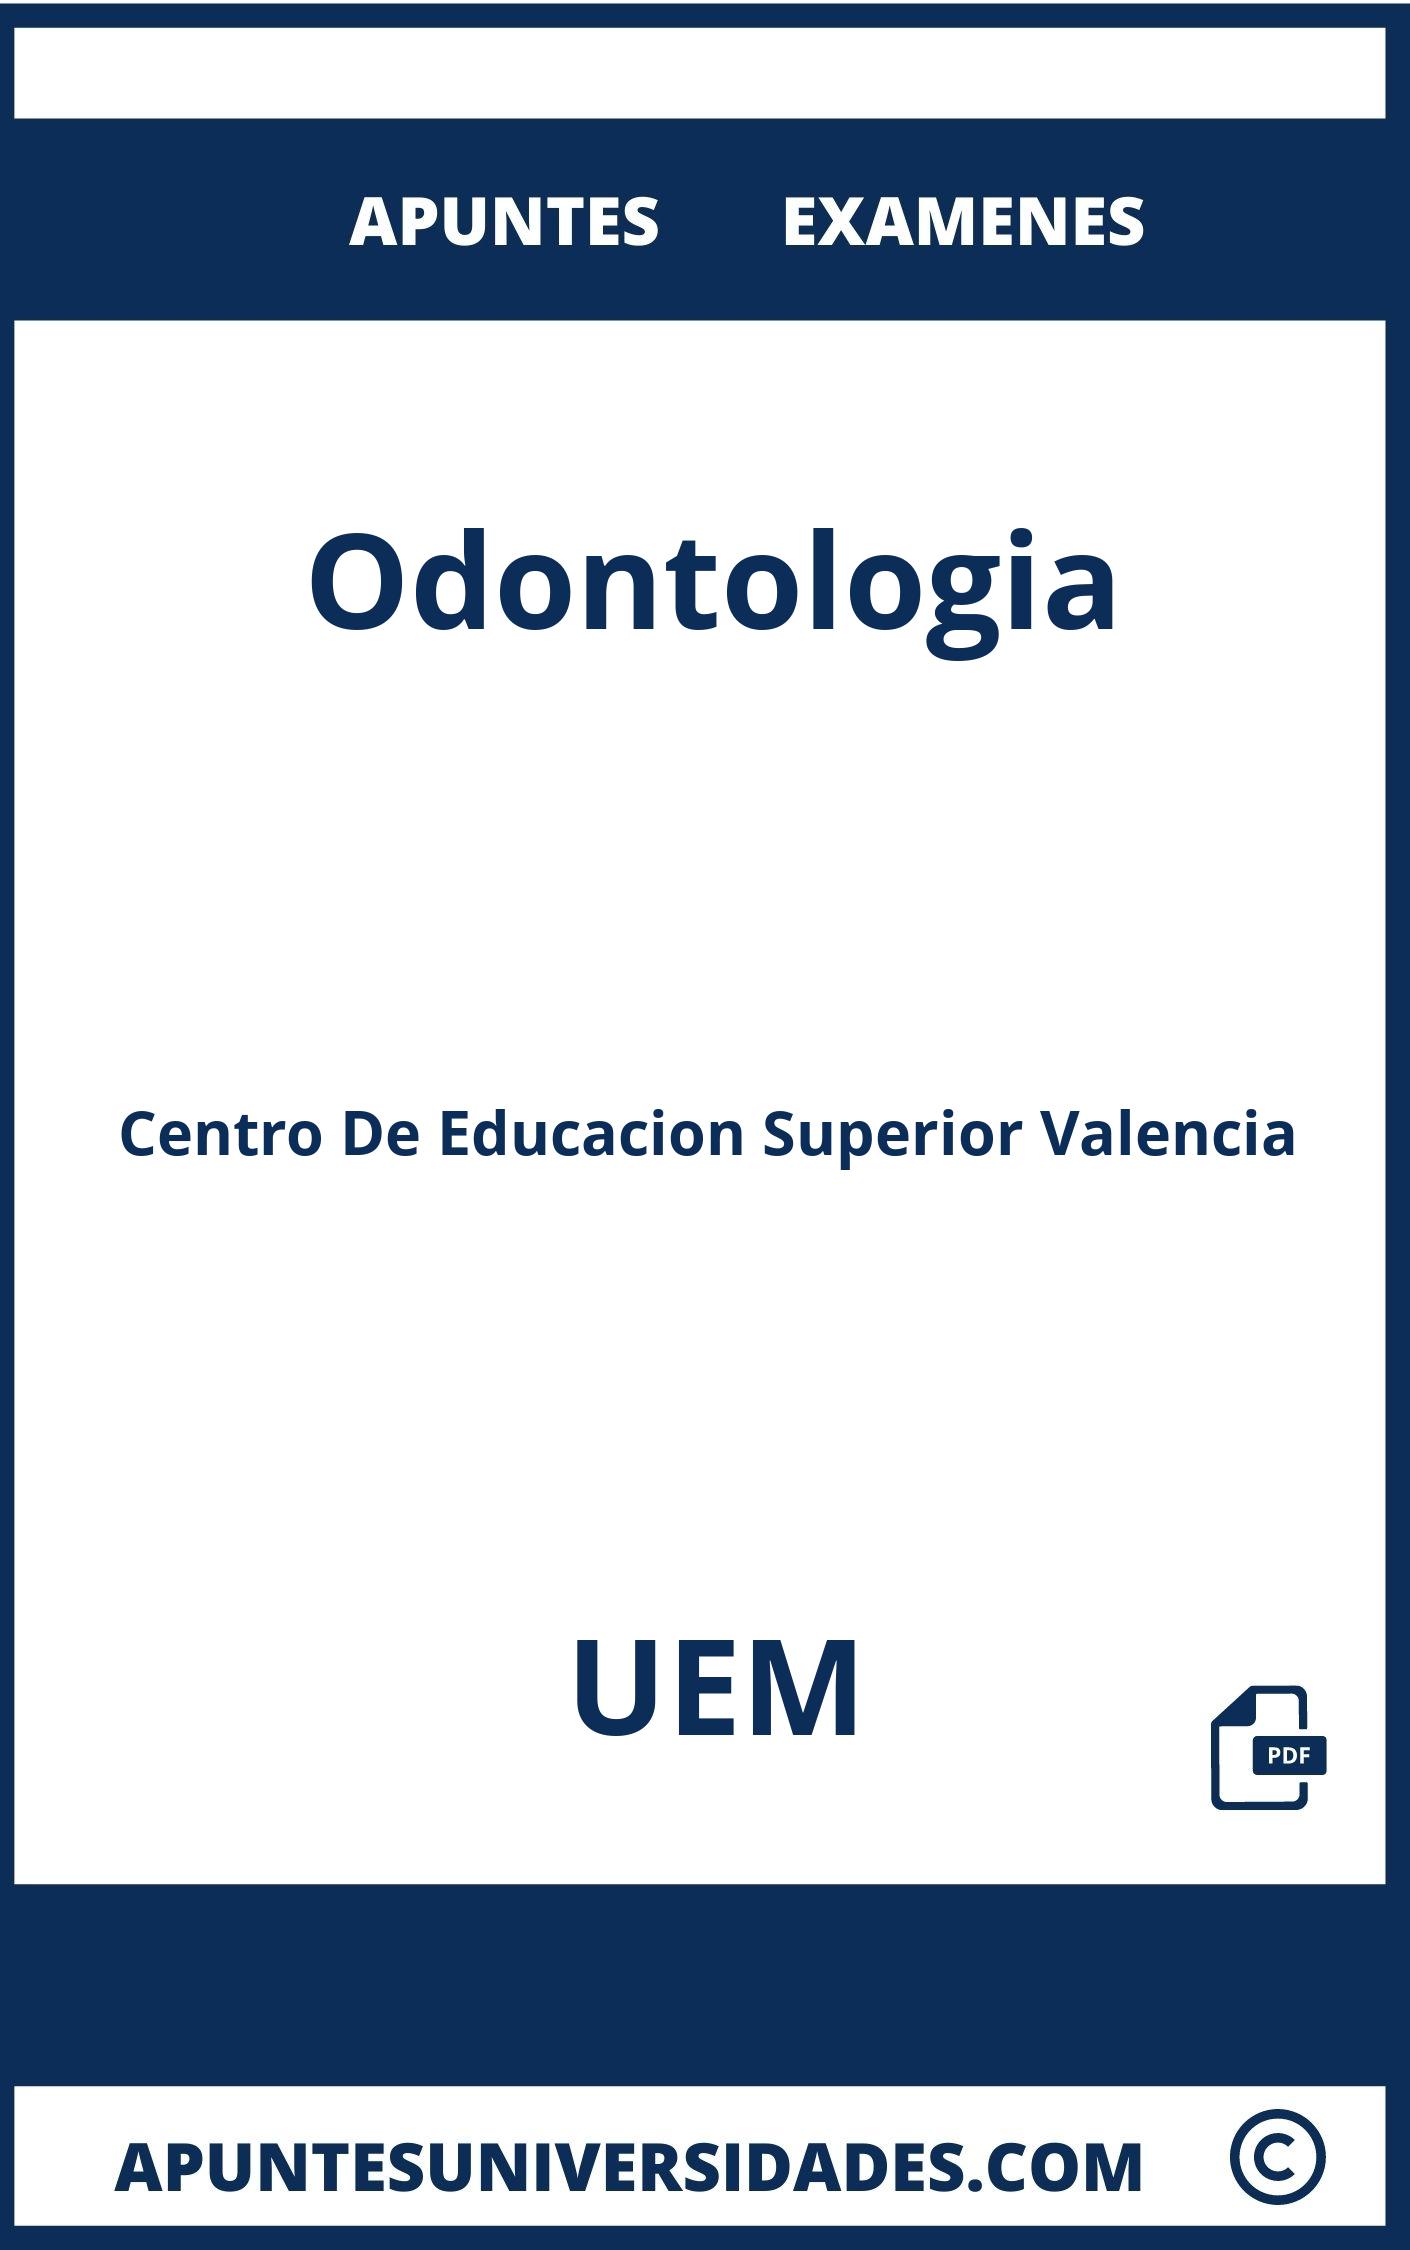 Apuntes Odontologia UEM y Examenes